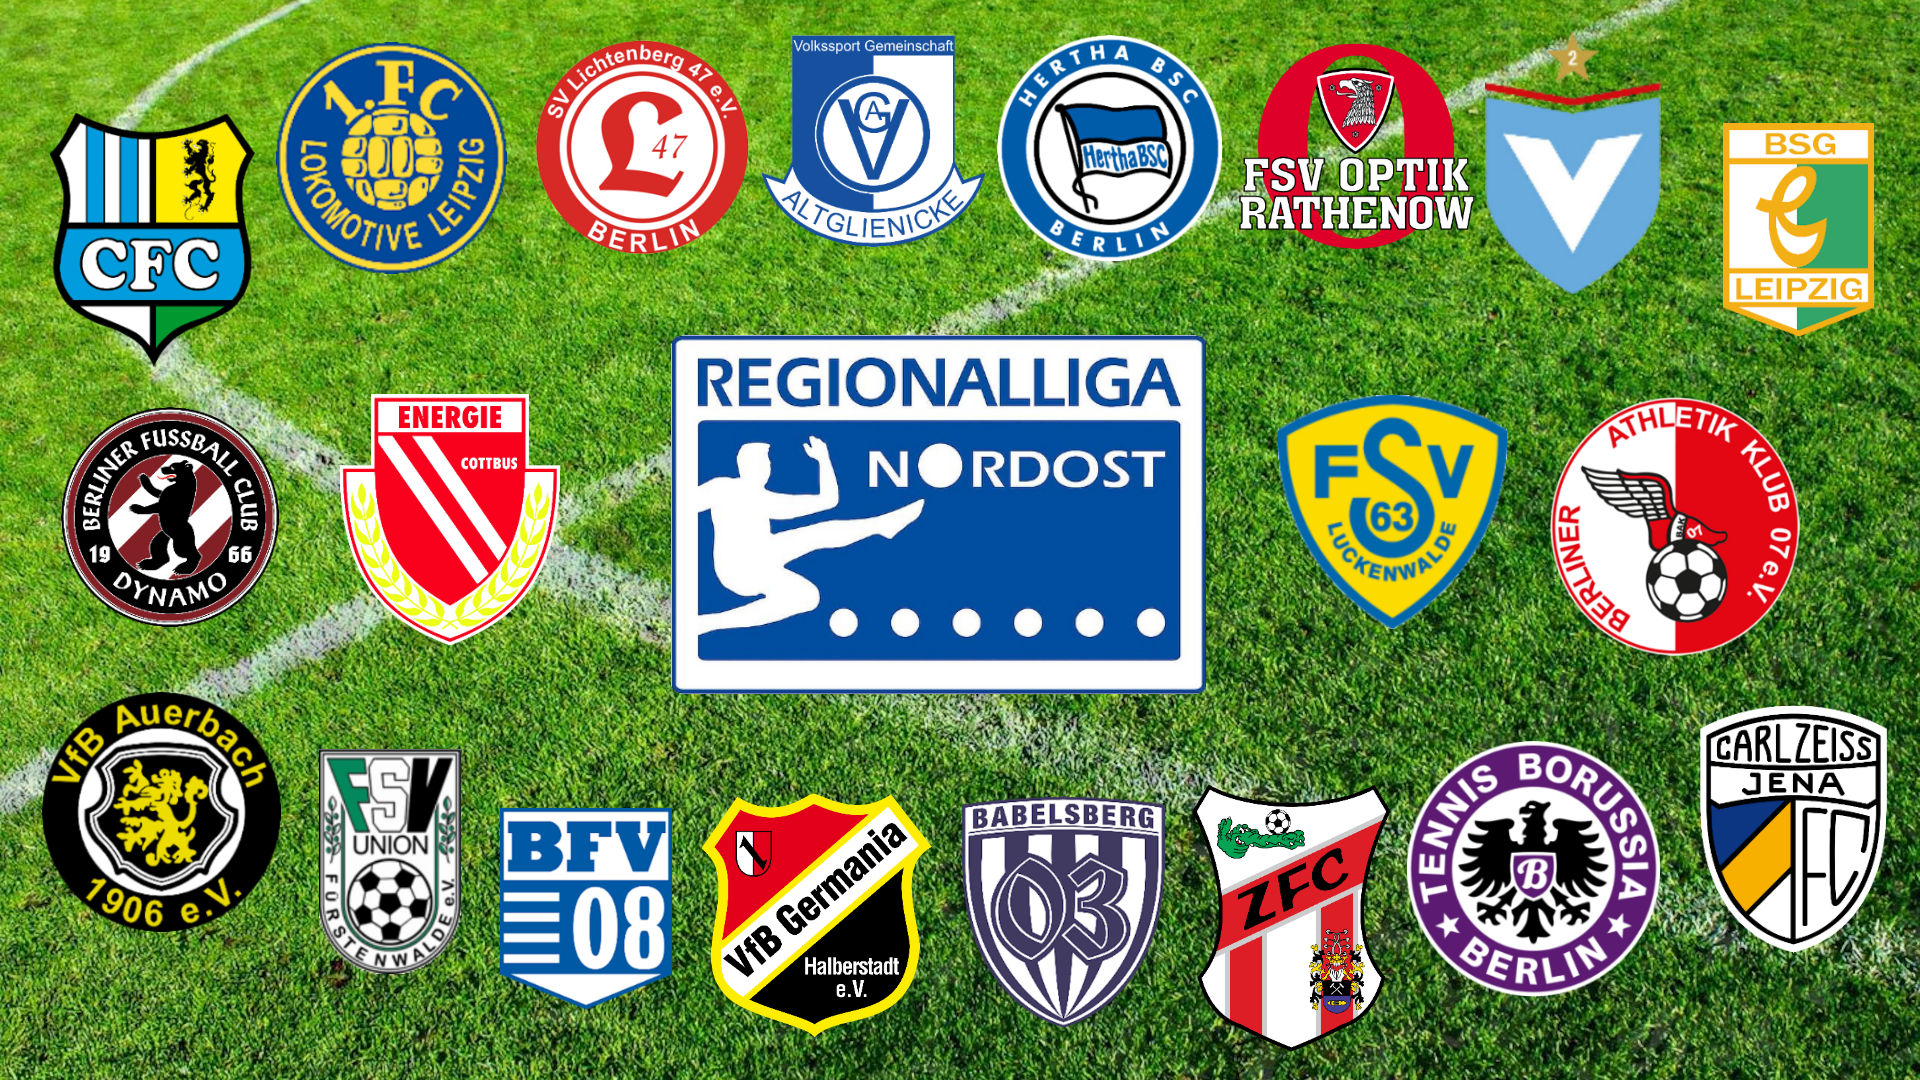 Regionalliga Nordost Teams